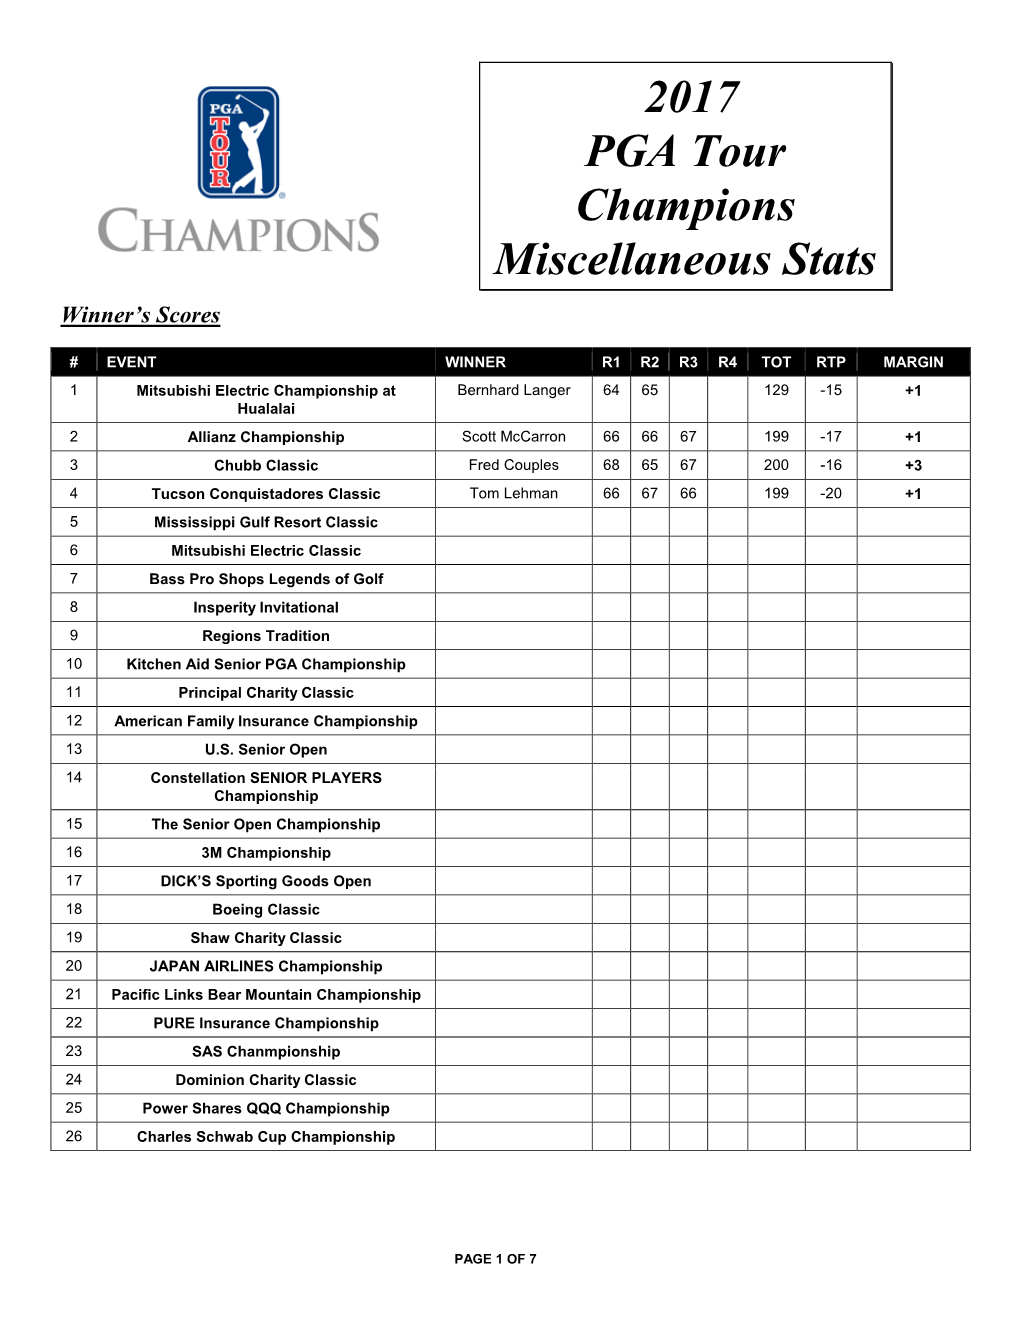 2017 PGA Tour Champions Miscellaneous Stats